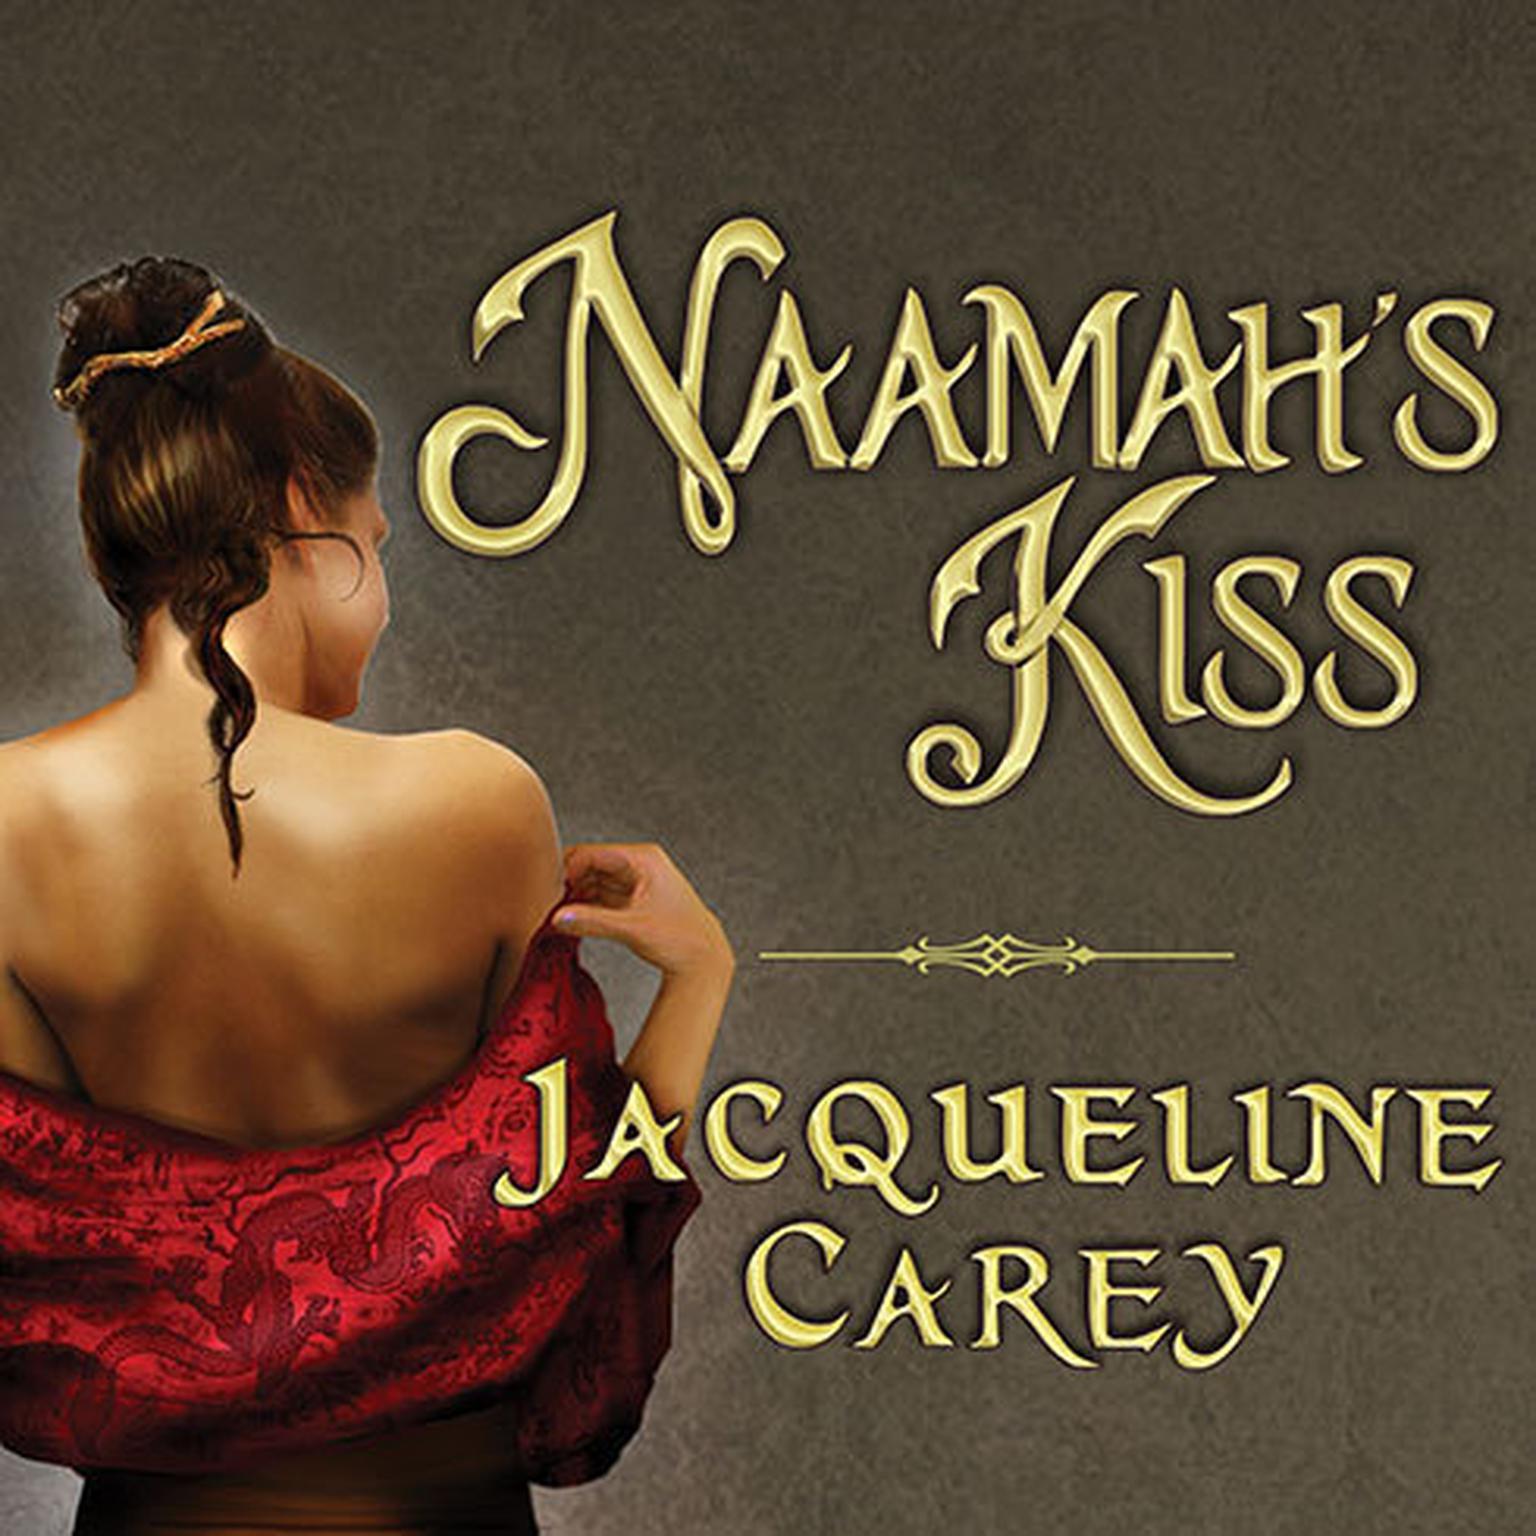 Naamahs Kiss Audiobook, by Jacqueline Carey